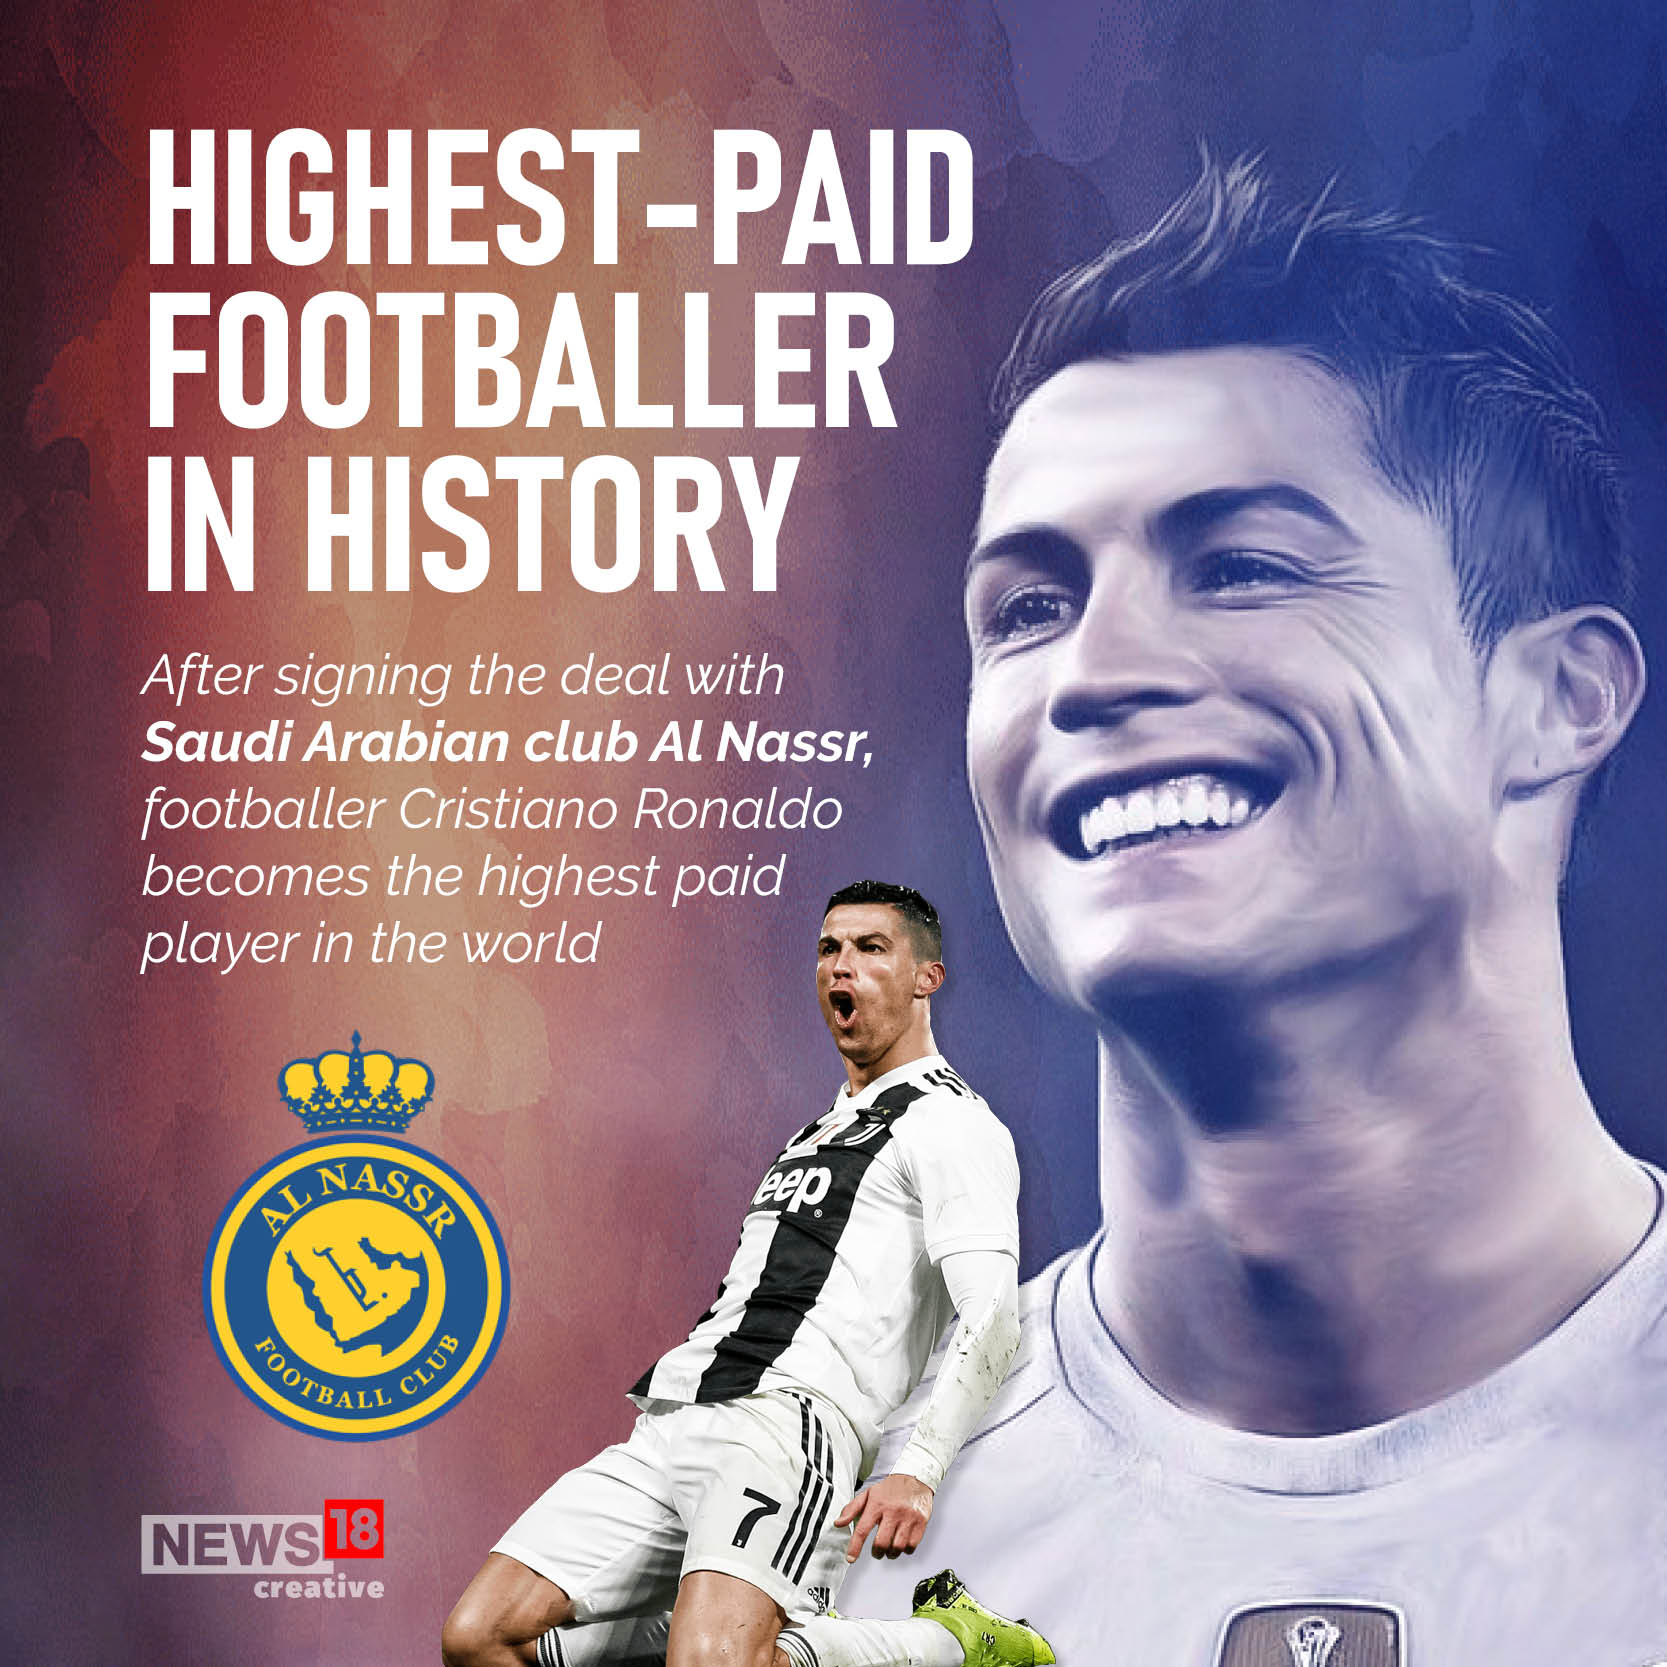 Cristiano Ronaldo HighestPaid Footballer after Signing for Al Nassr News18